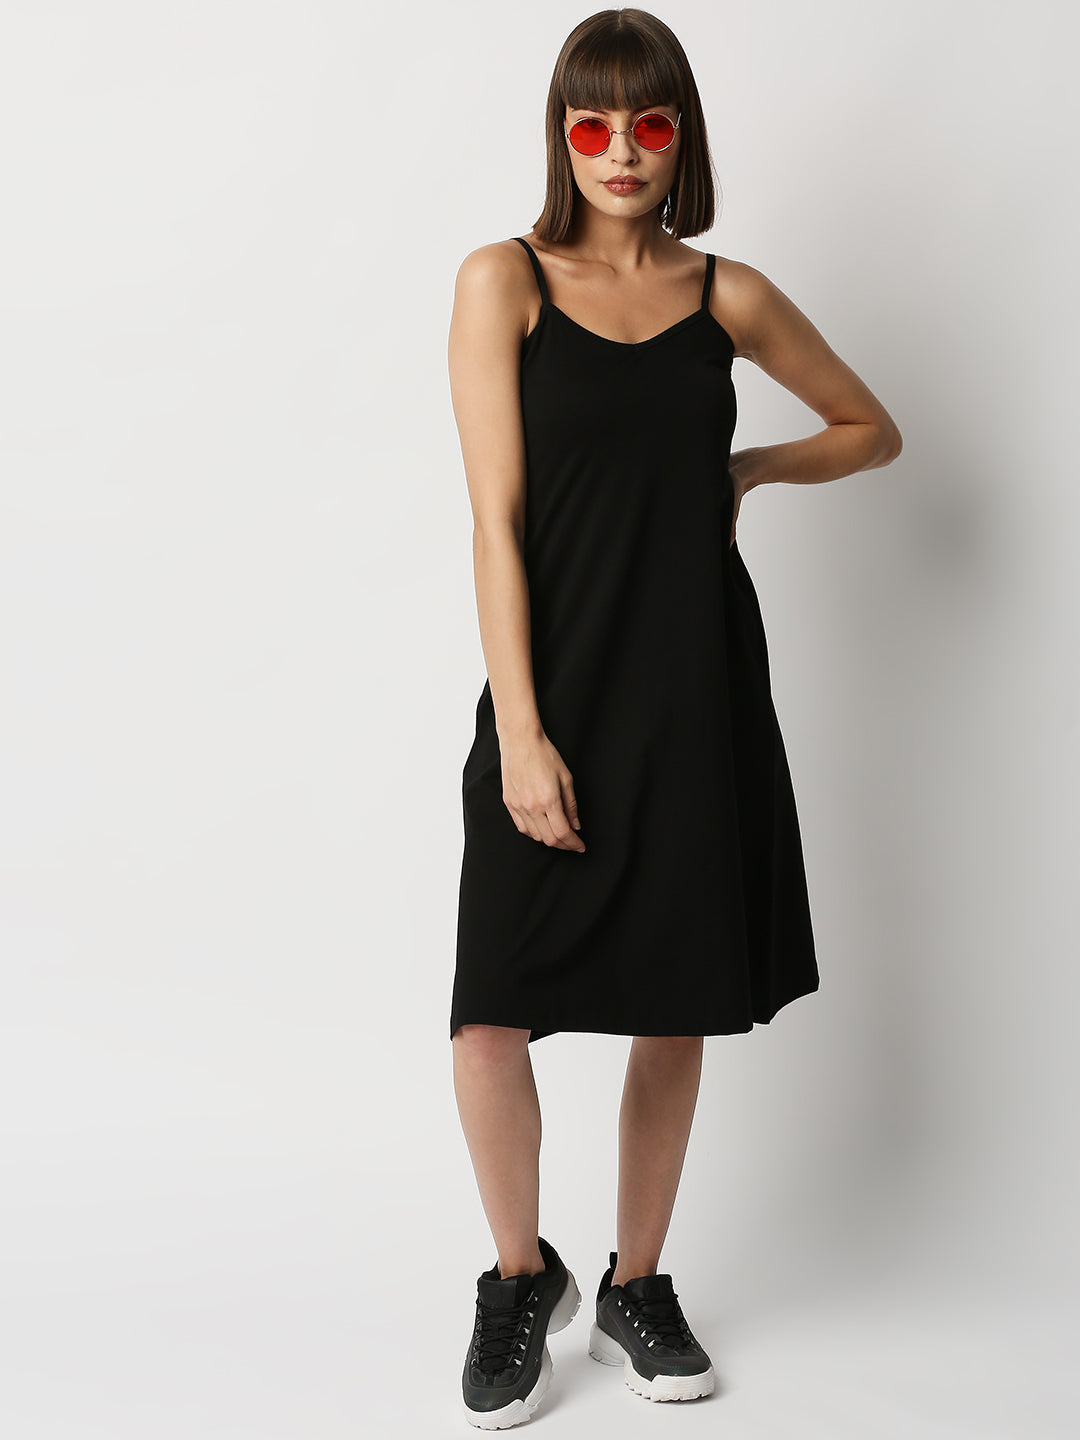 Buy BLAMBLACK Women Round neck Dresses Black Color Solid Sleeveless